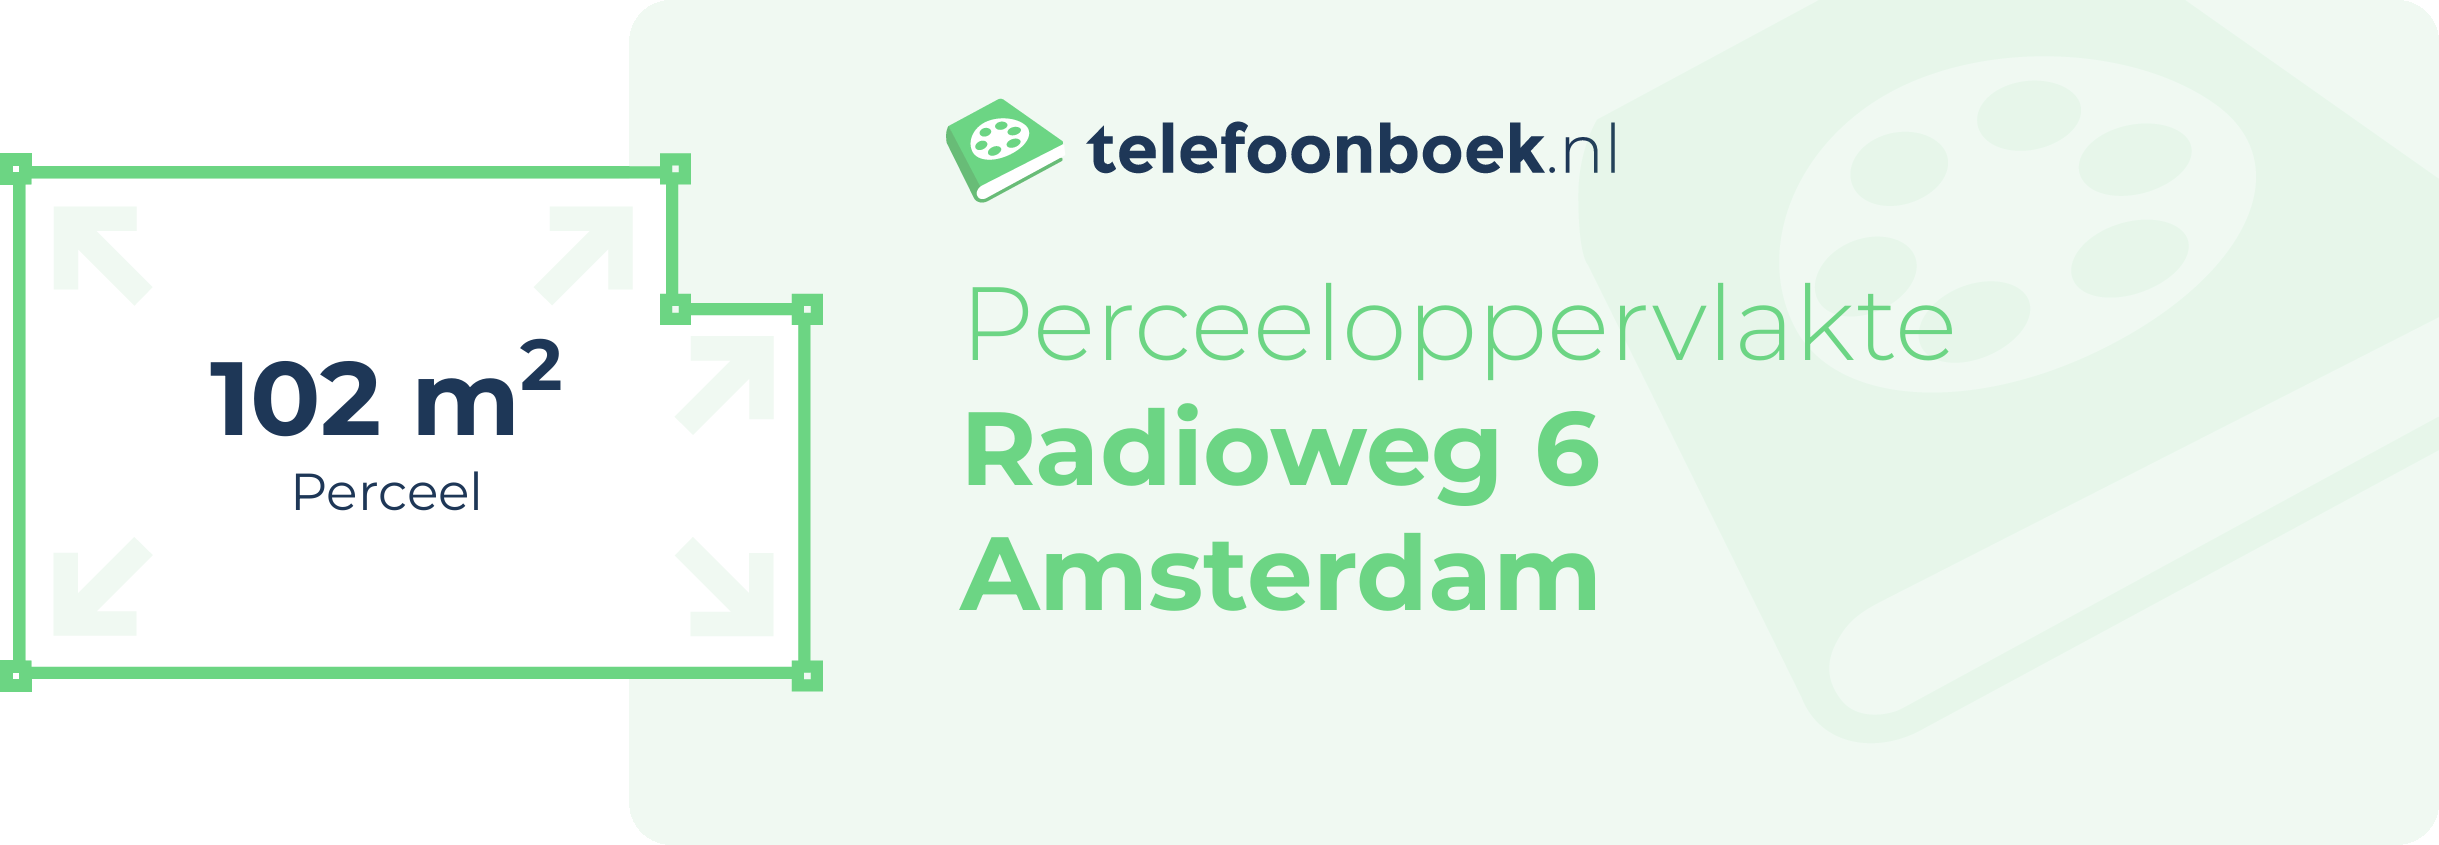 Perceeloppervlakte Radioweg 6 Amsterdam